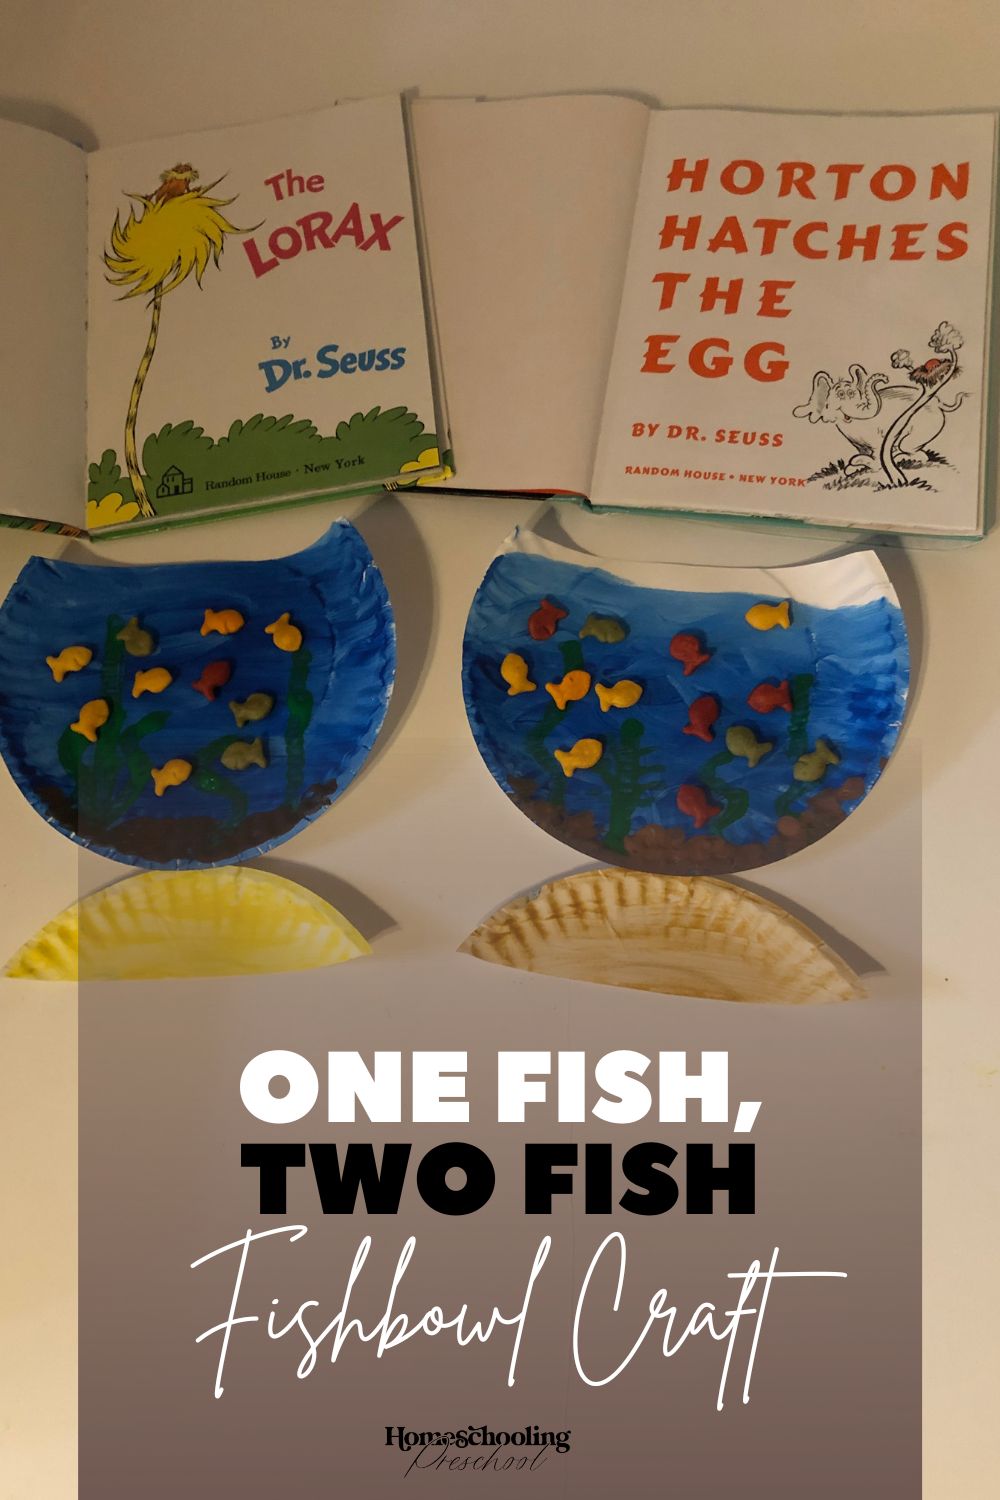 One Fish, Two Fish Fishbowl Craft